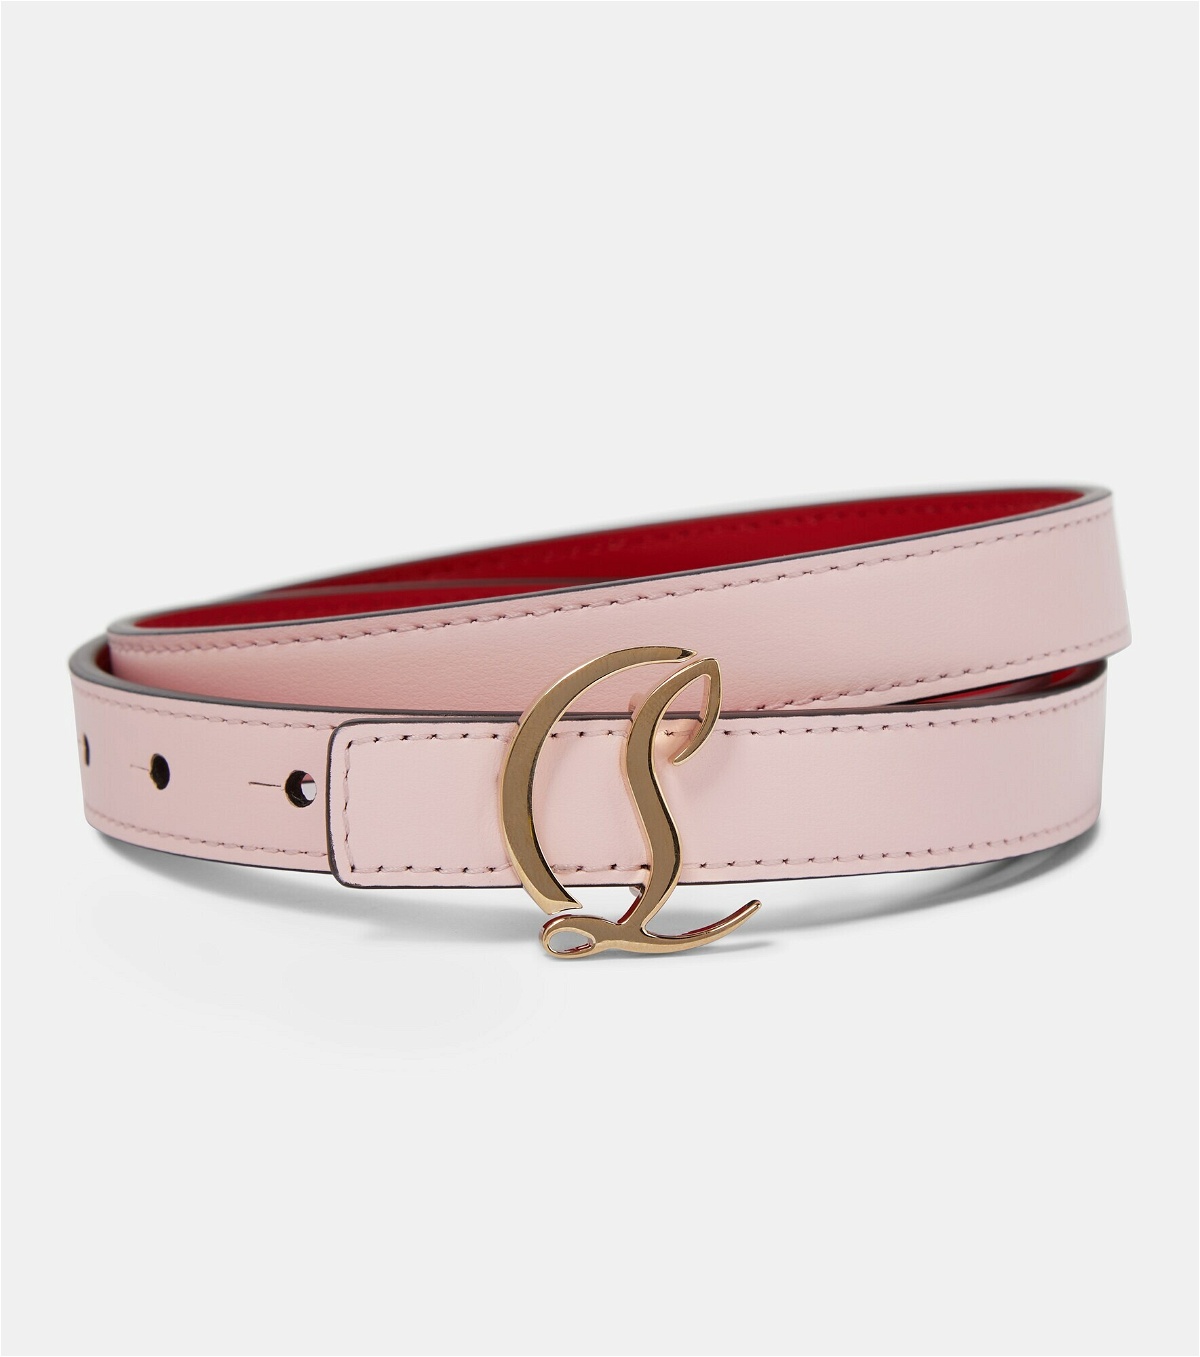 Carasky Embellished Leather Belt in Pink - Christian Louboutin